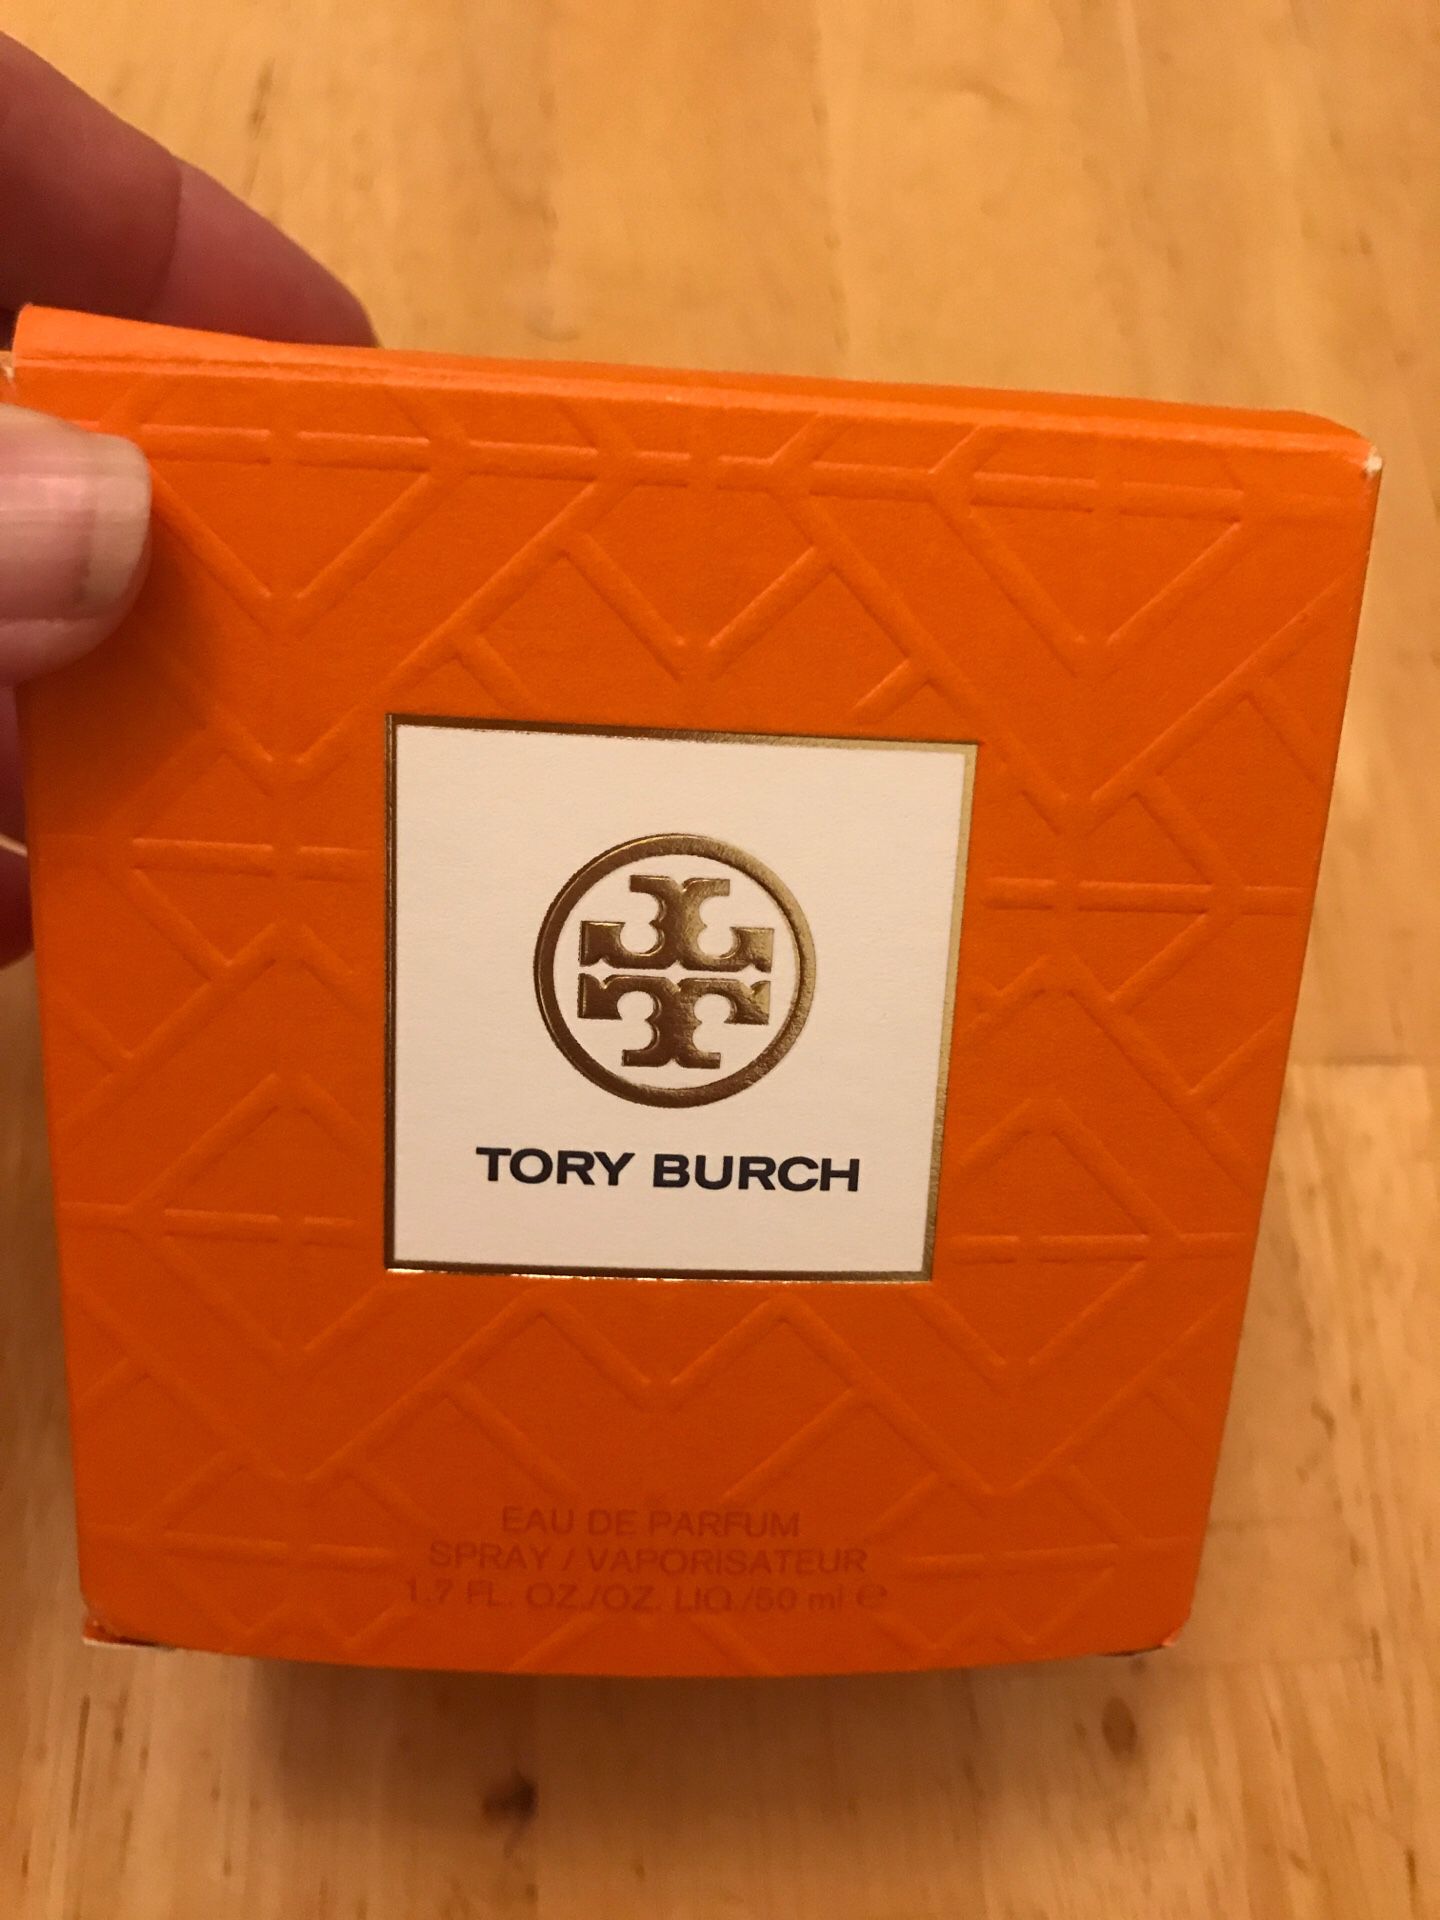 Tory Burch perfume brand new in box